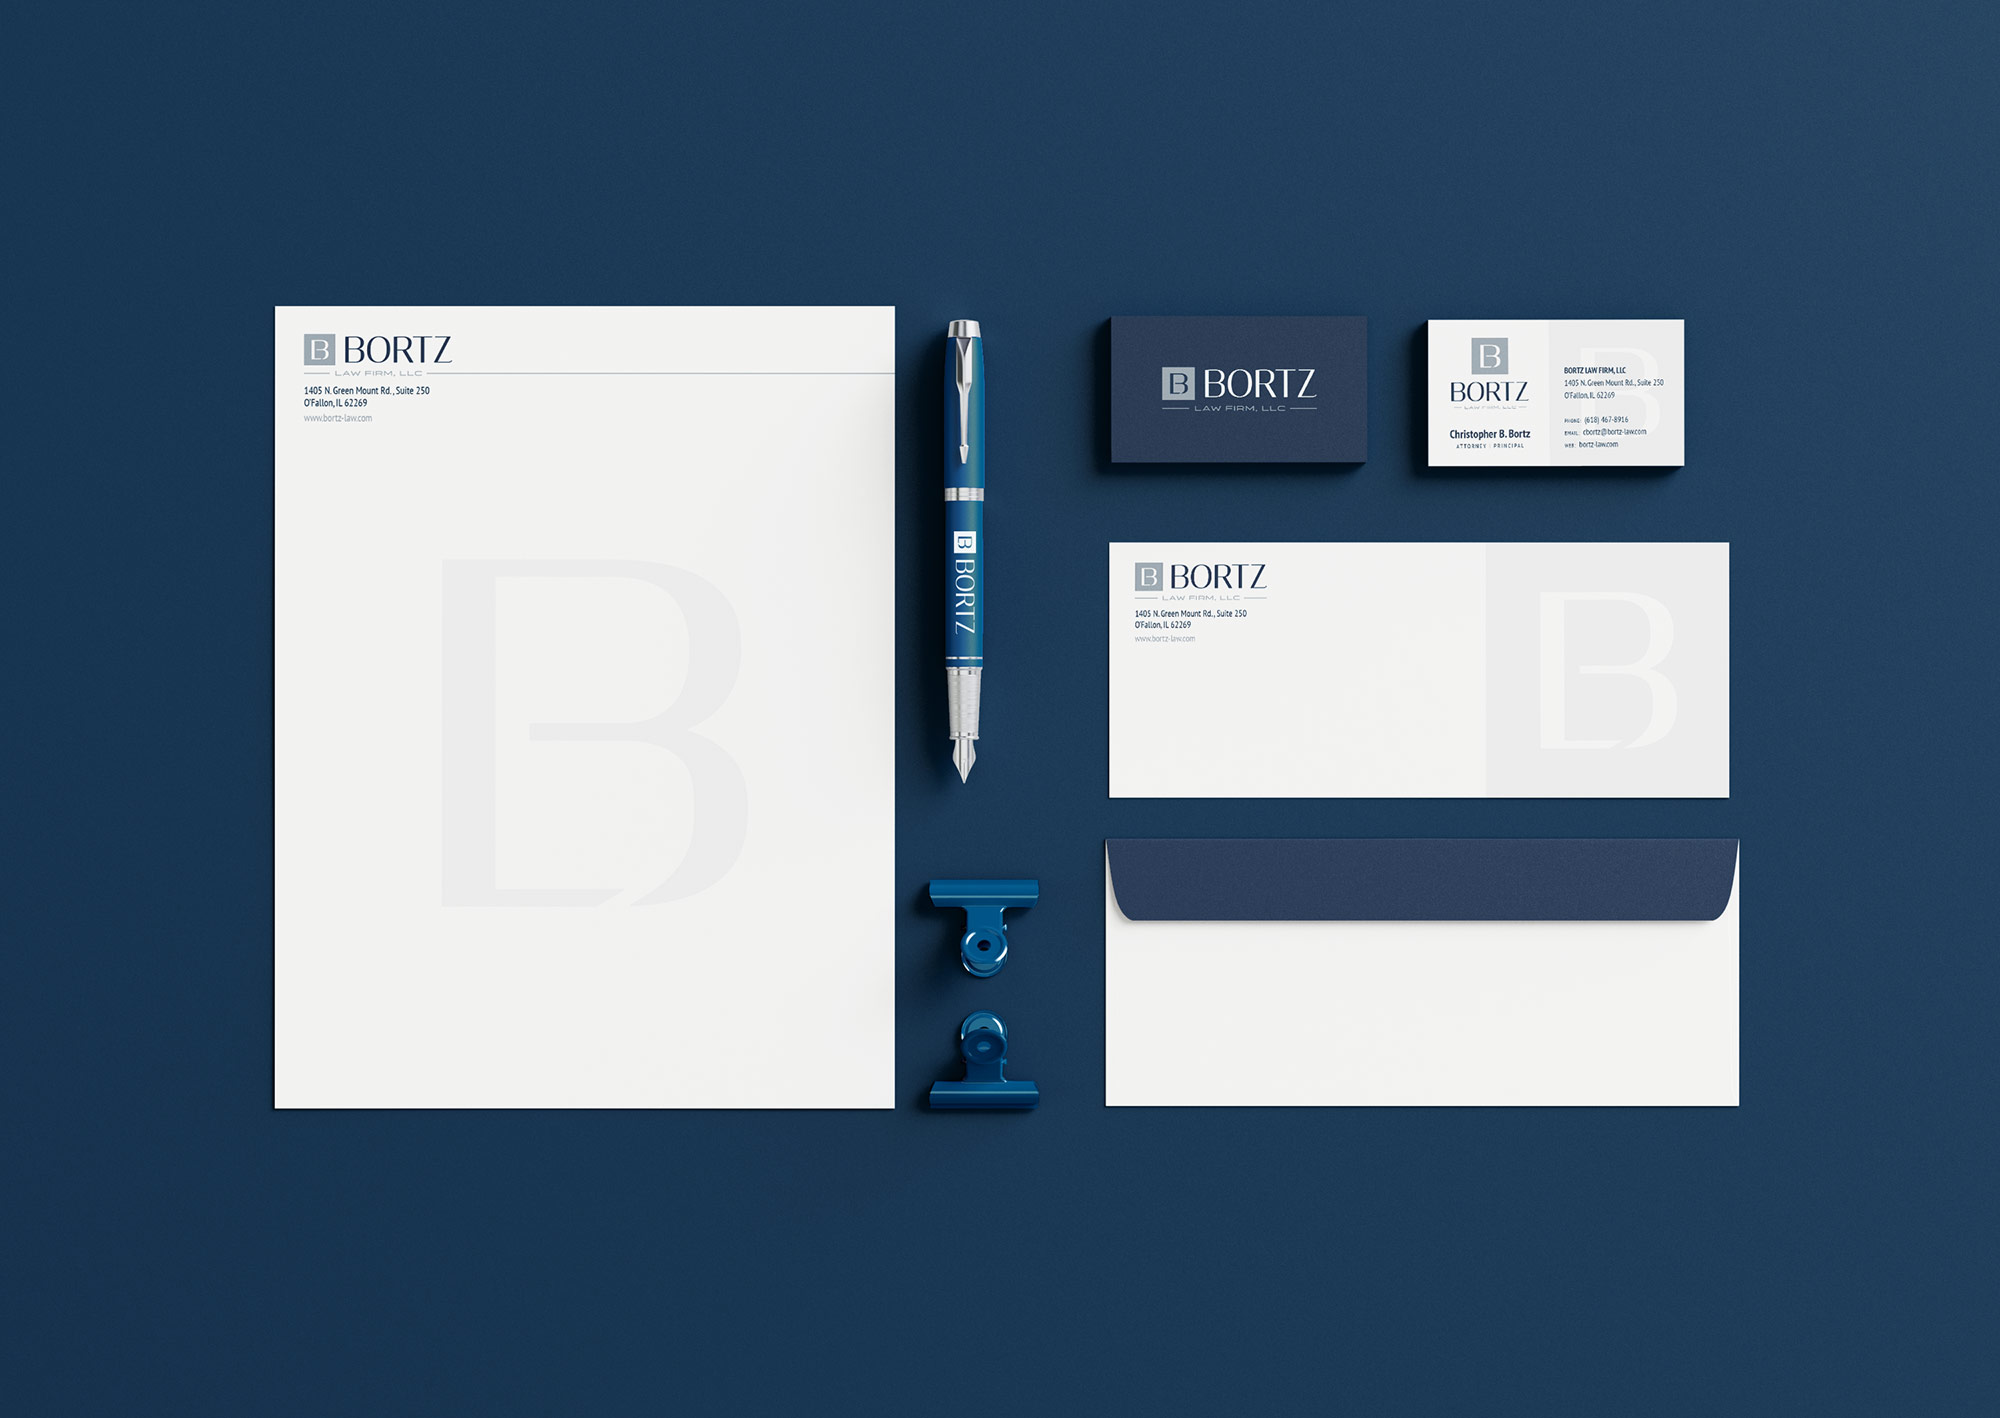 bortz-identity-design